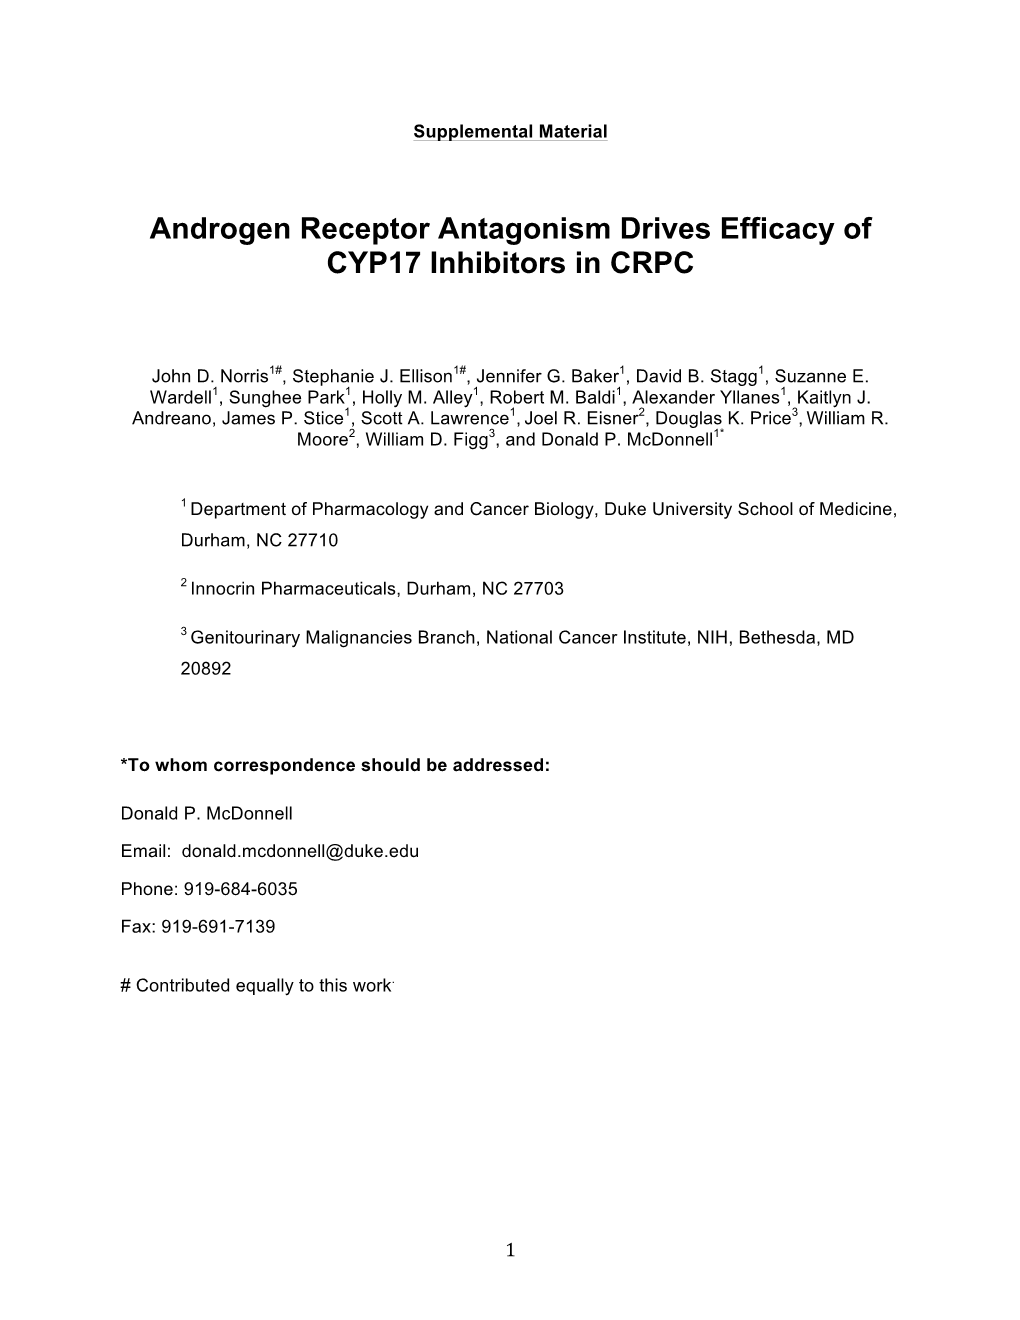 Androgen Receptor Antagonism Drives Efficacy of CYP17 Inhibitors in CRPC